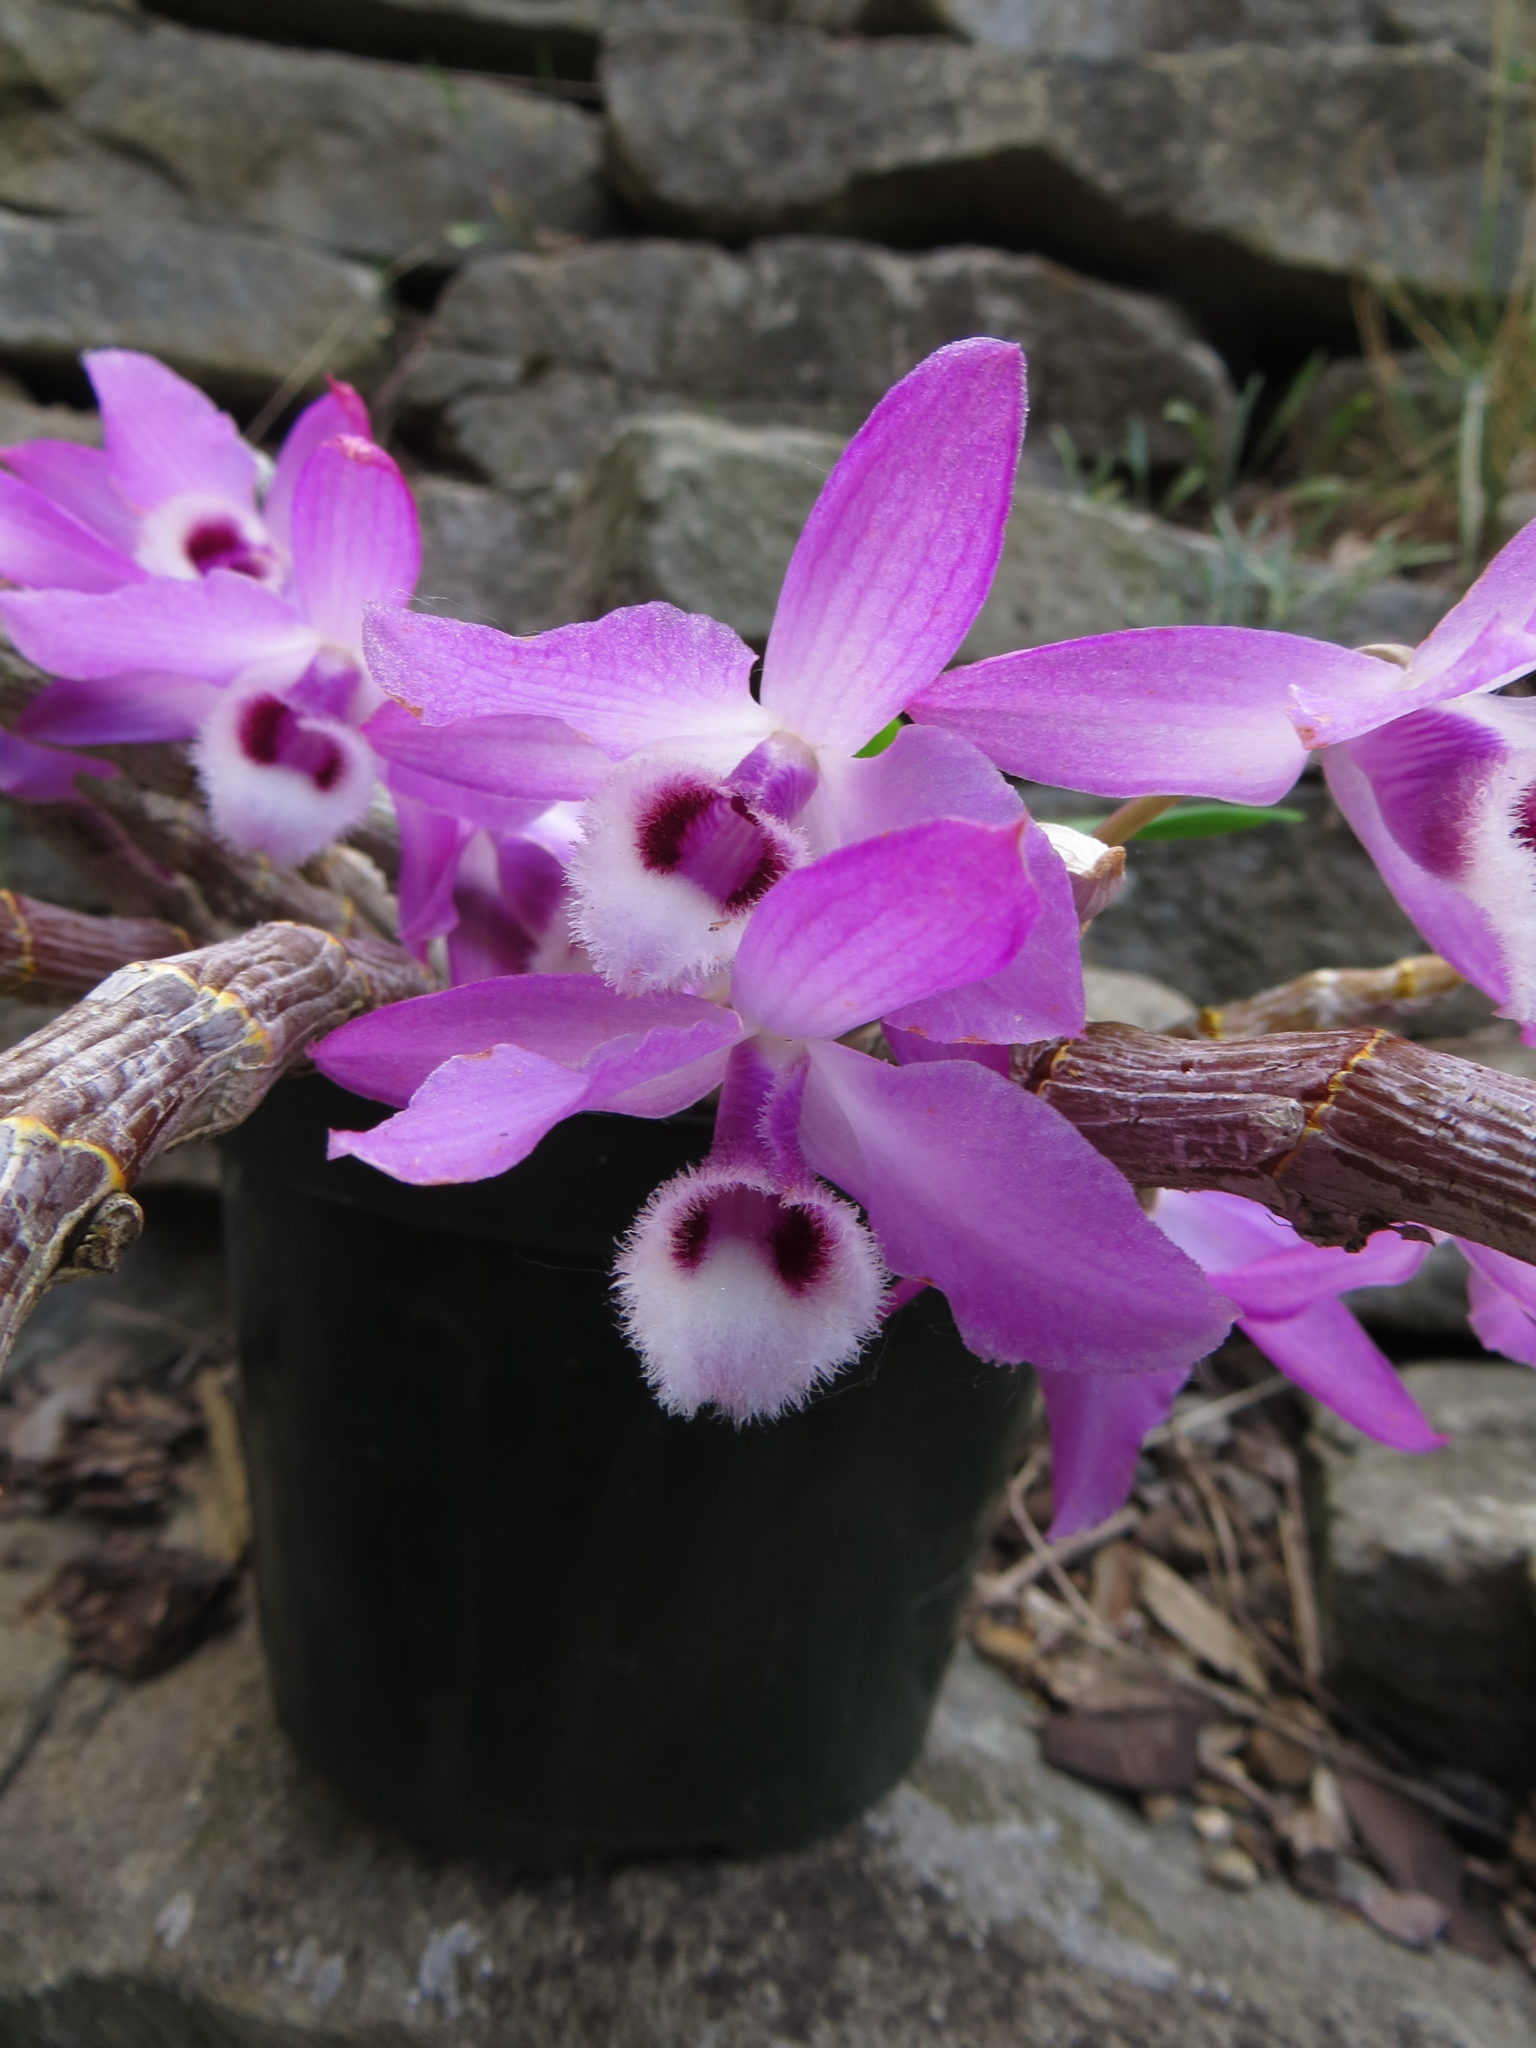 Dendrobium:  my favorite genus